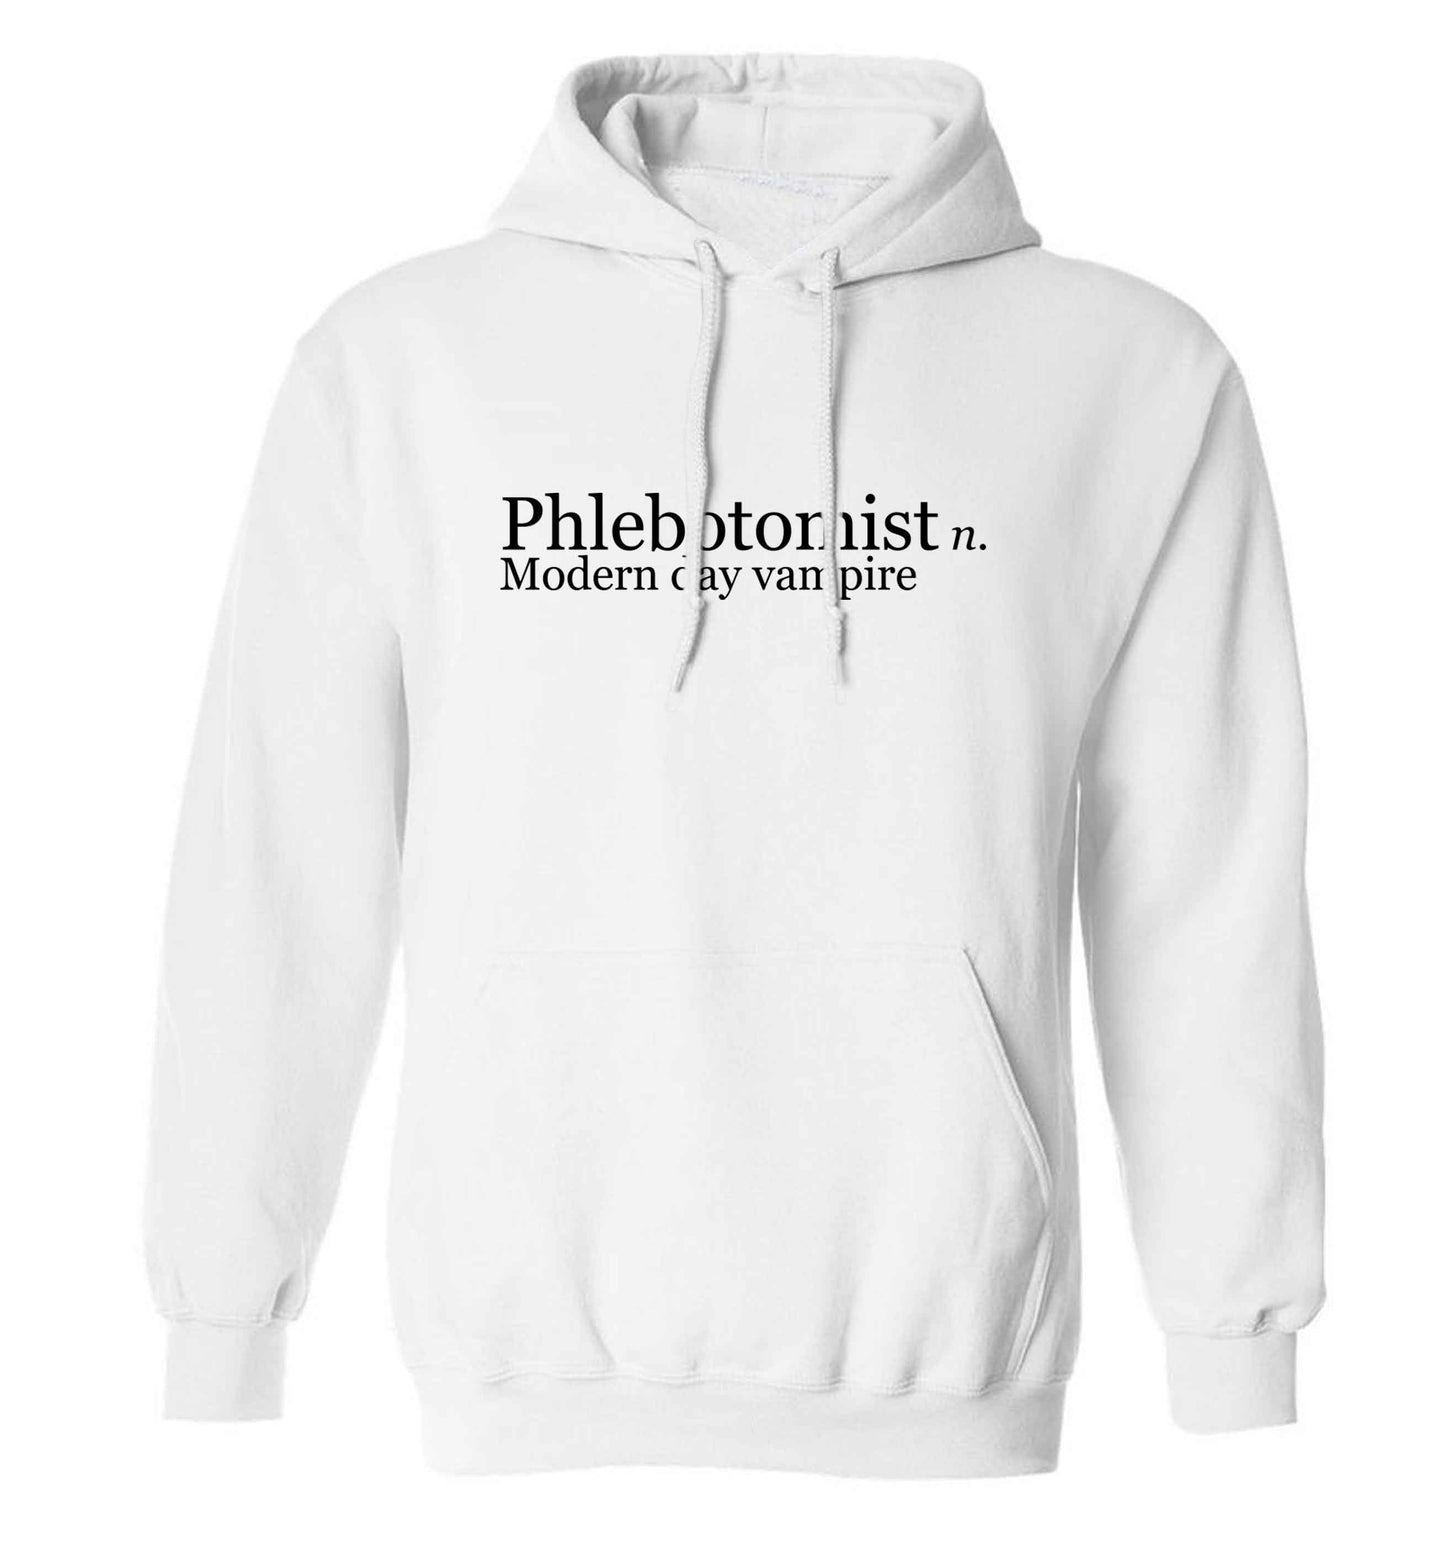 Phlebotomist - Modern day vampire adults unisex white hoodie 2XL